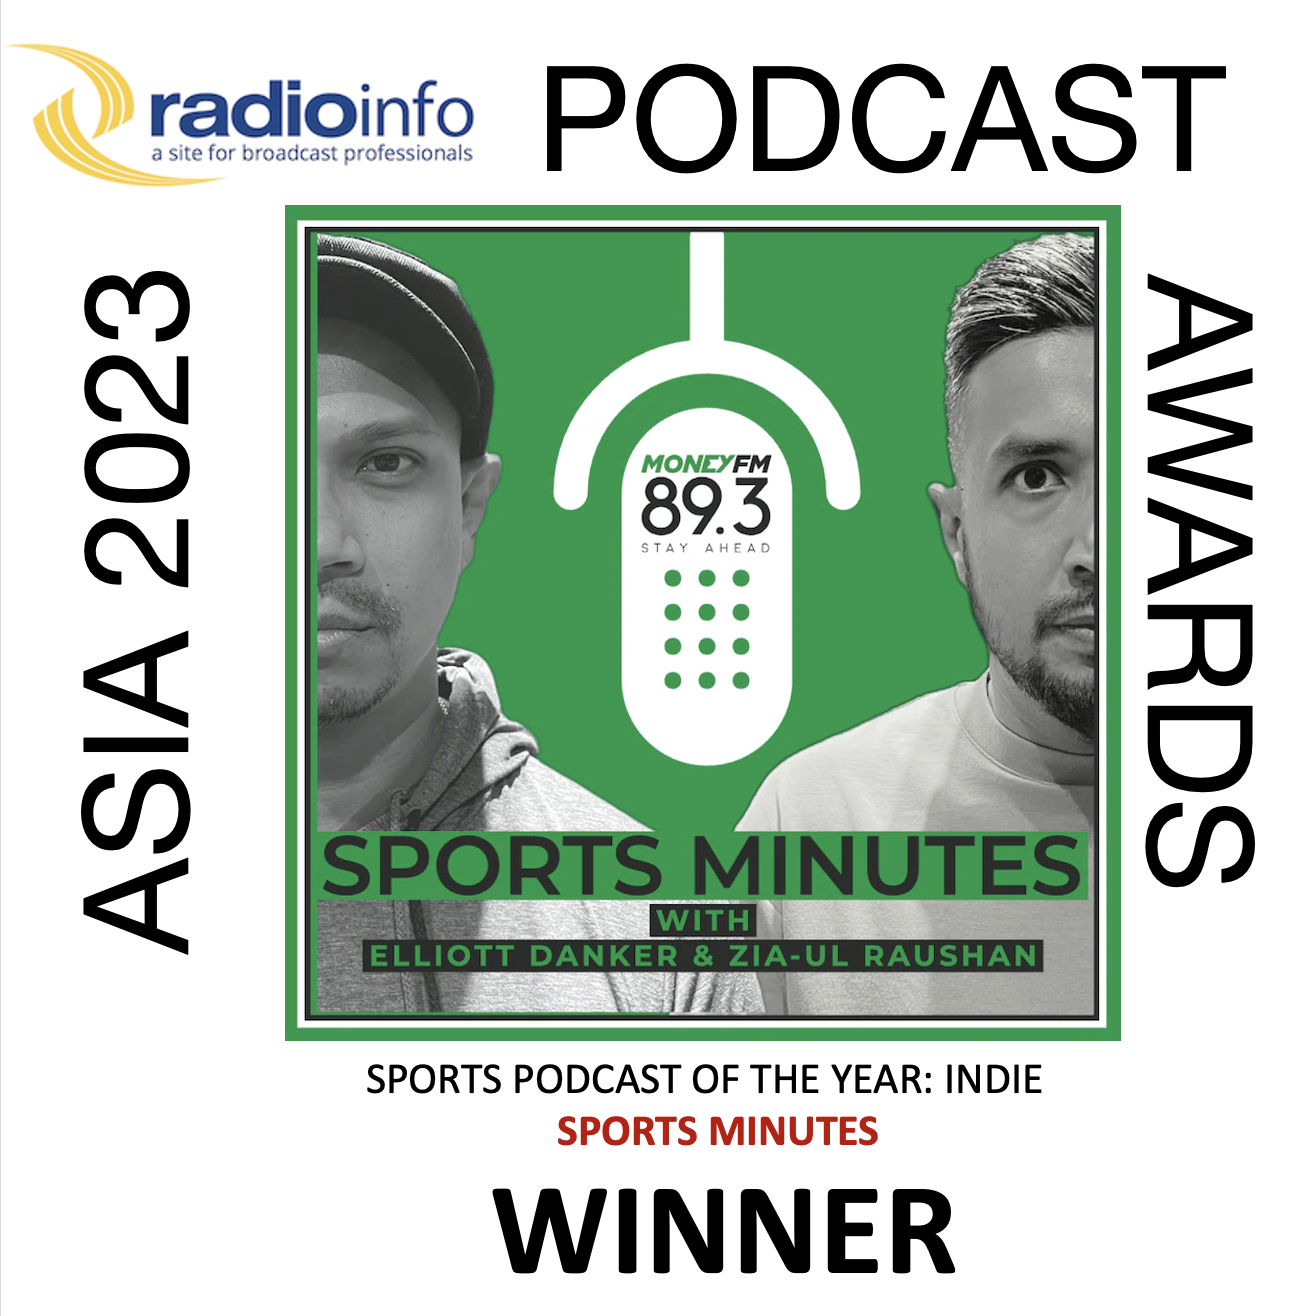 Sports Minutes: Sports - Indie - Money FM 89.3